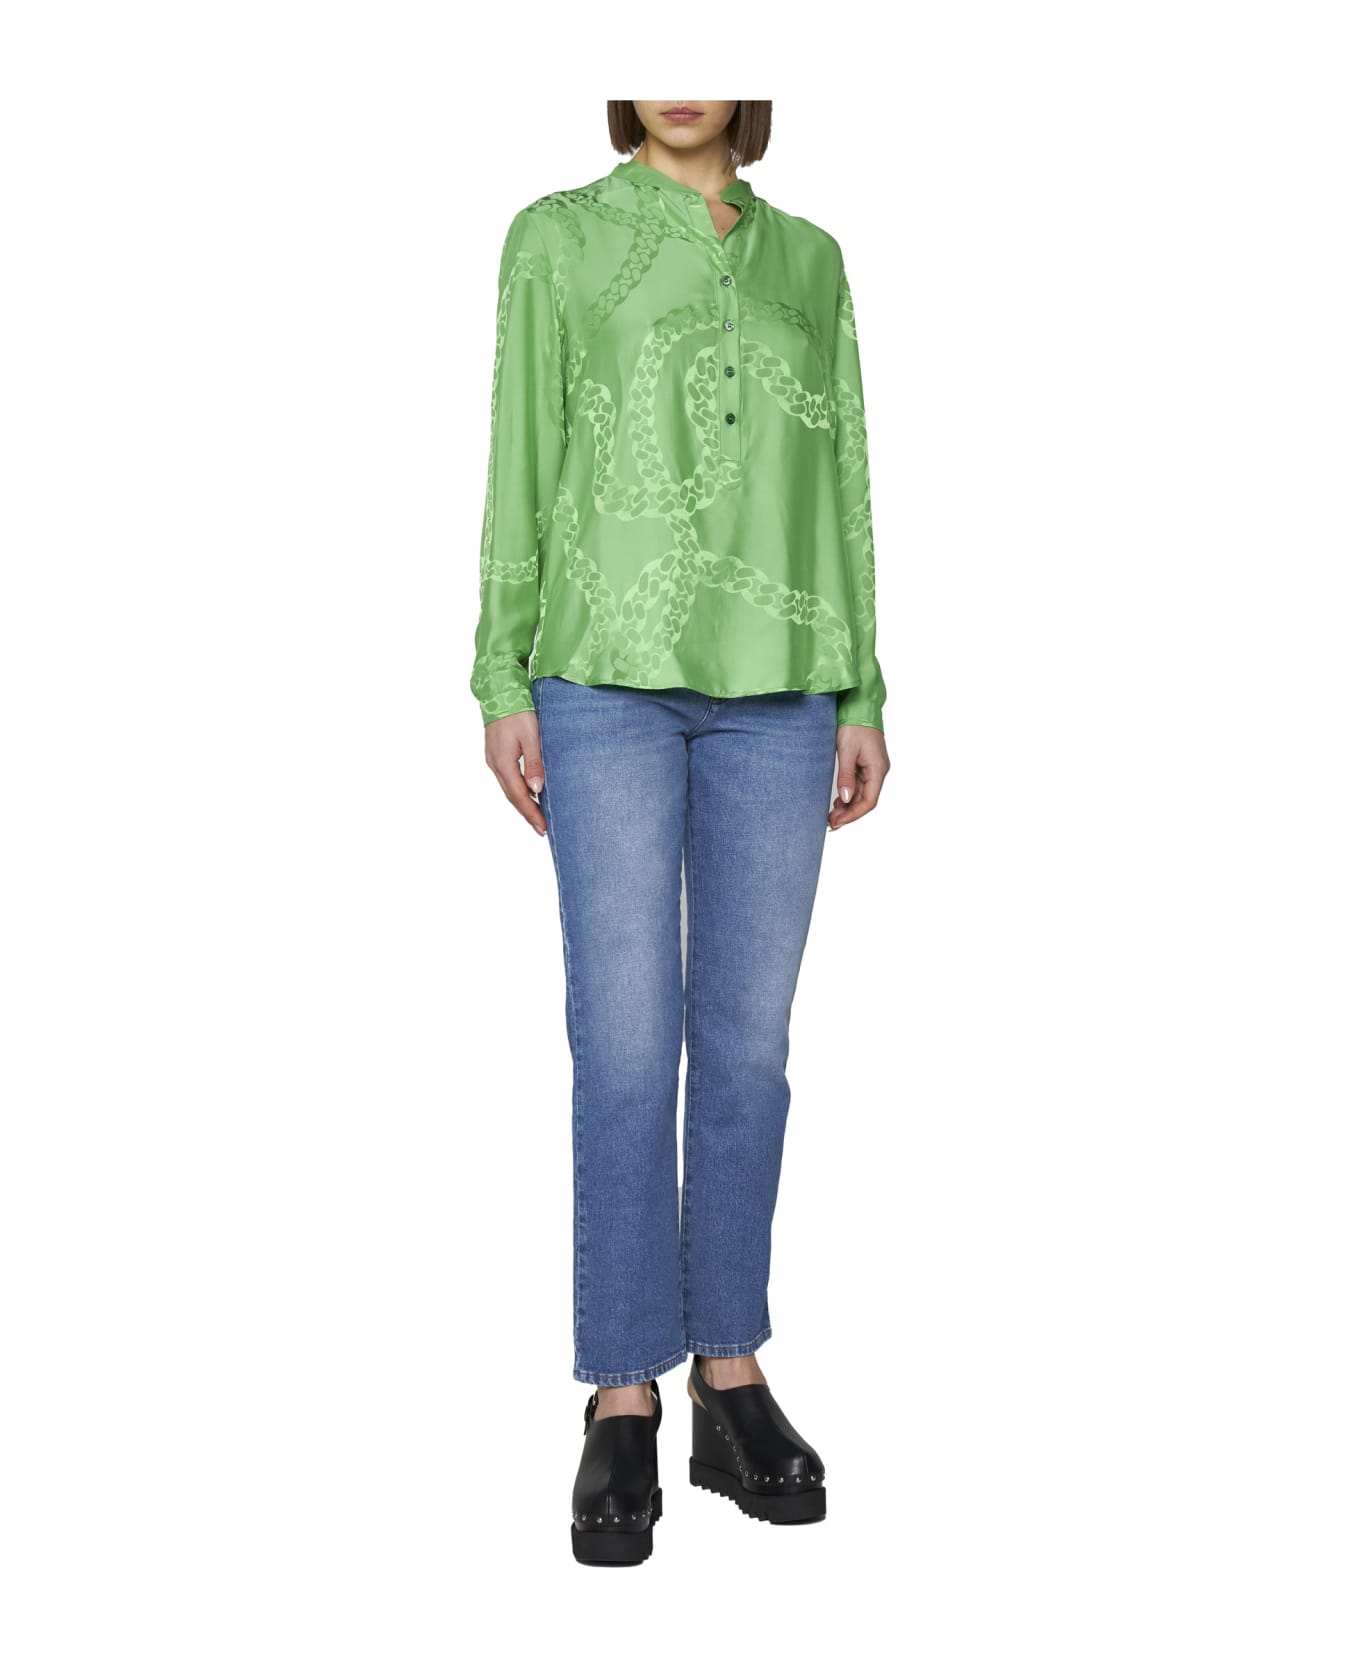 Stella McCartney Shirt - Bright green